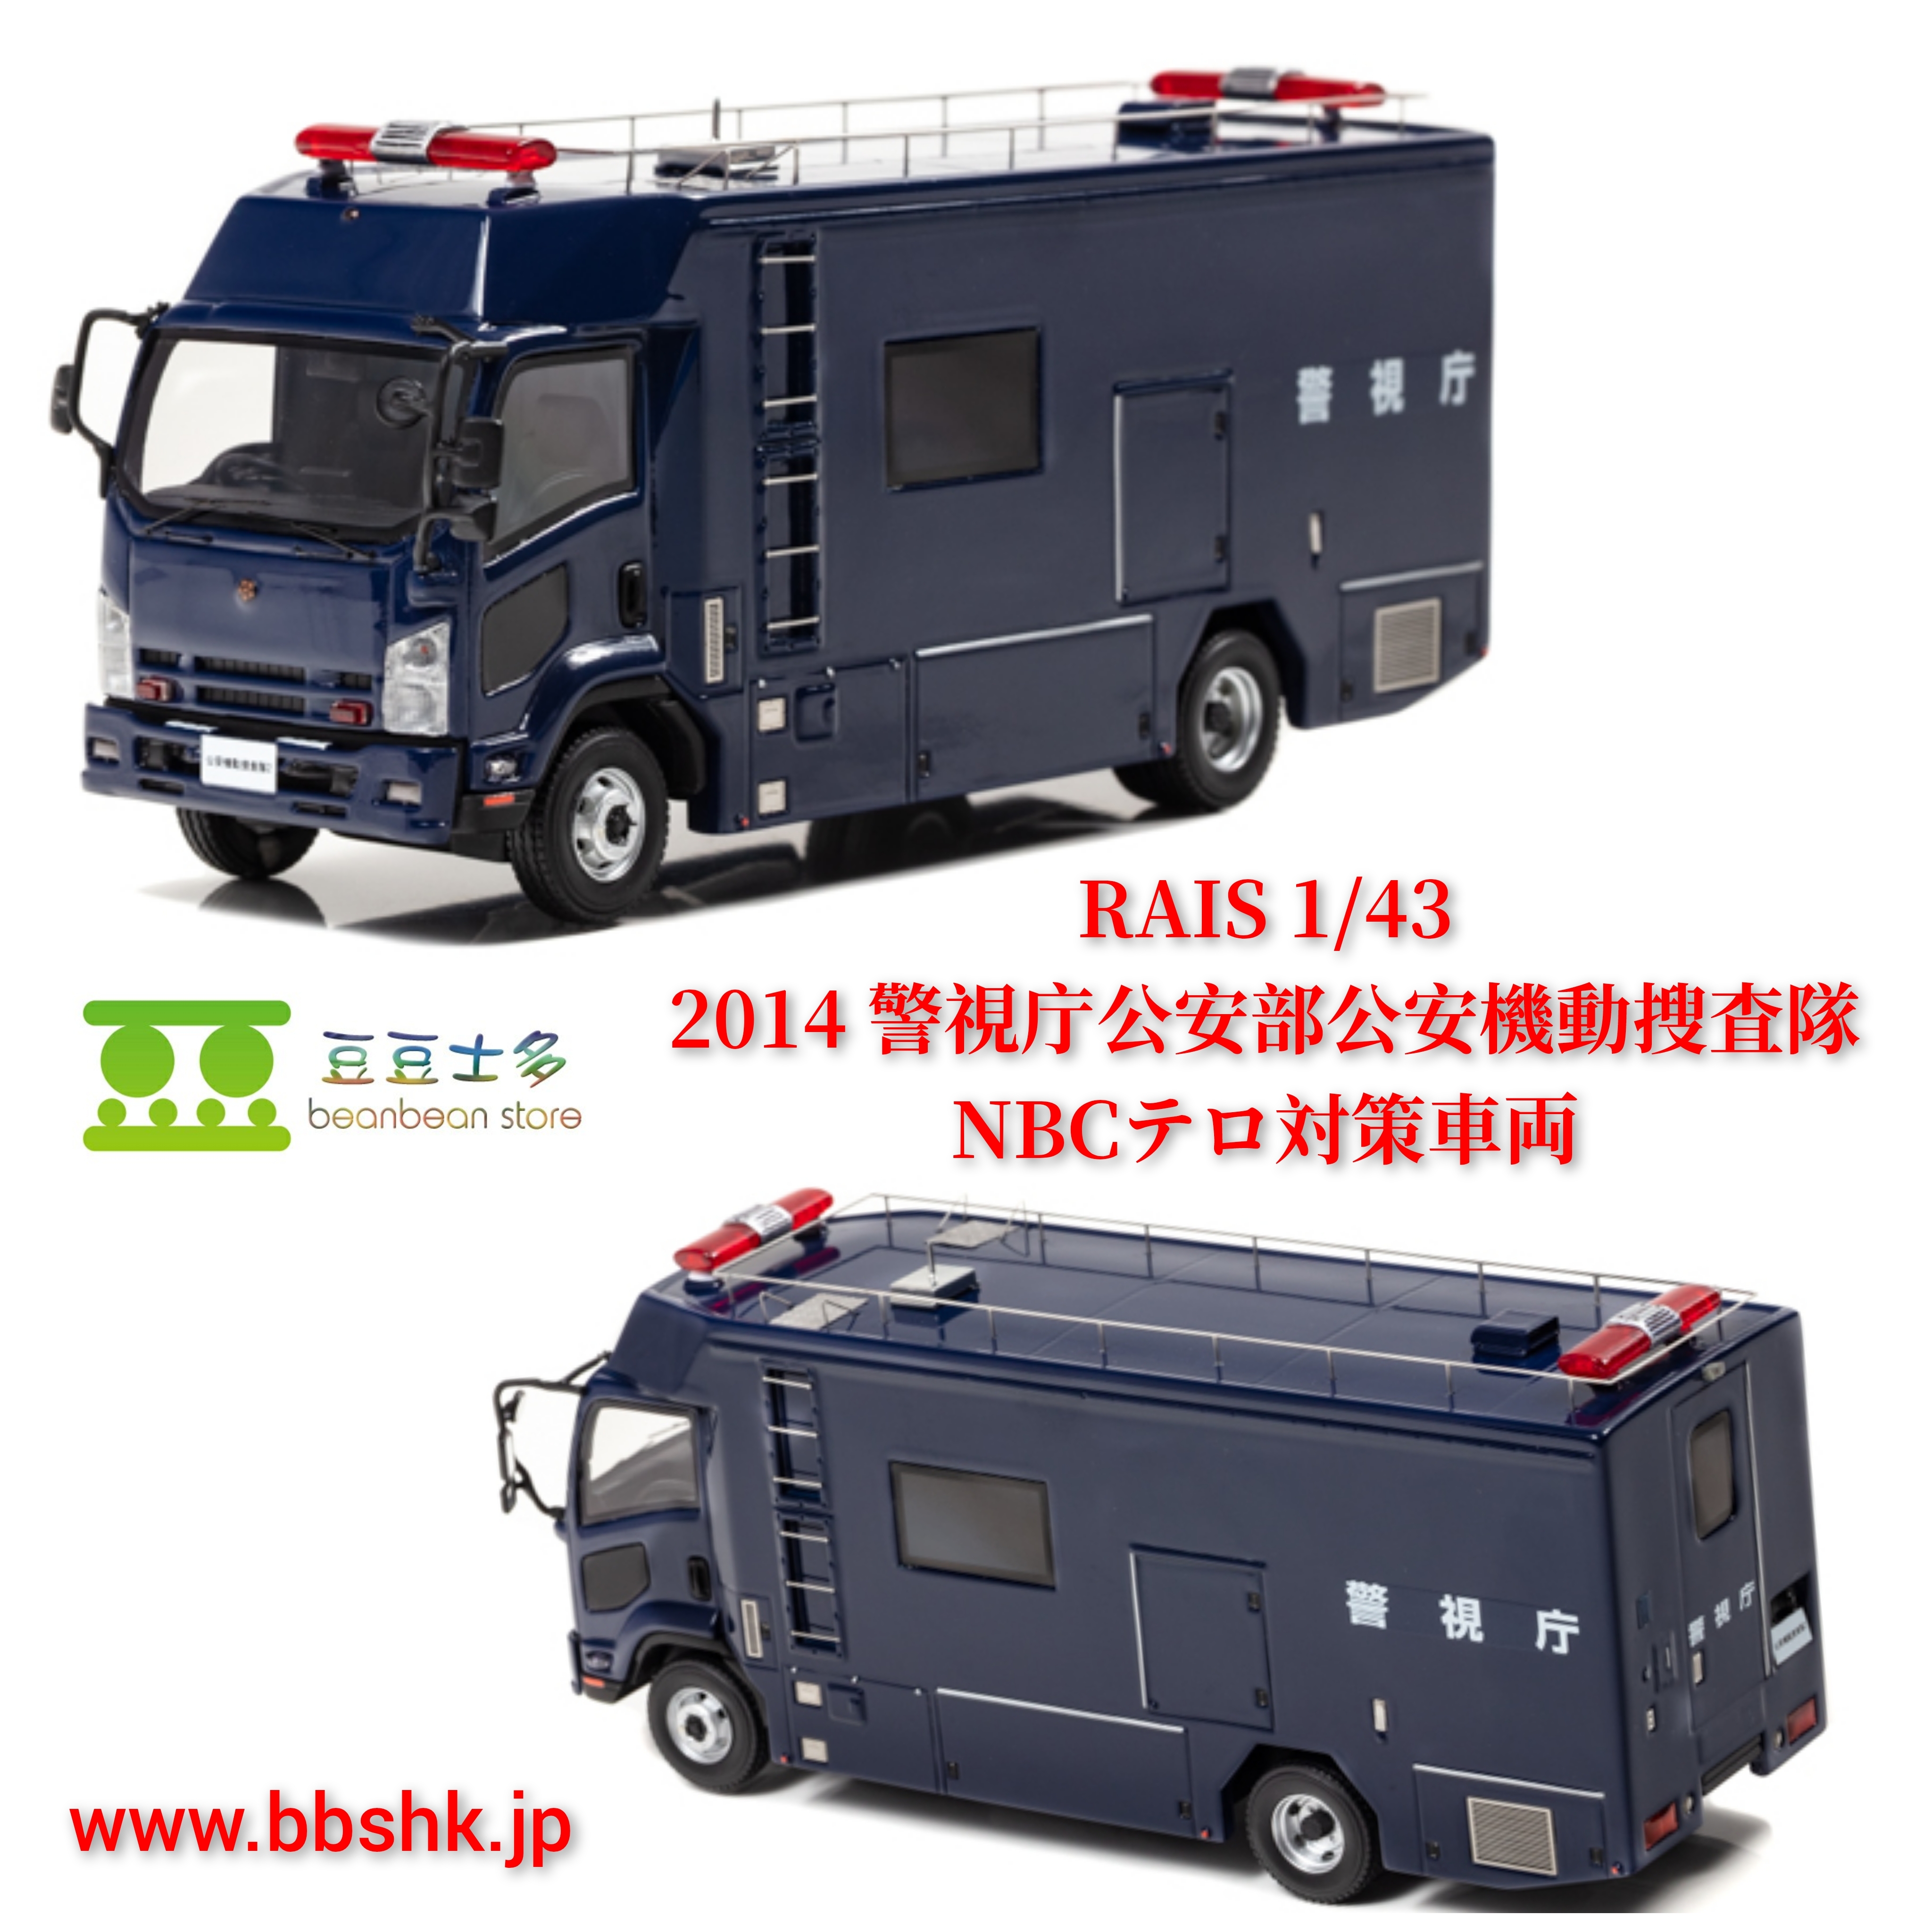 RAI'S 1/43 2014 警視庁公安部公安機動捜査隊 NBCテロ対策車両